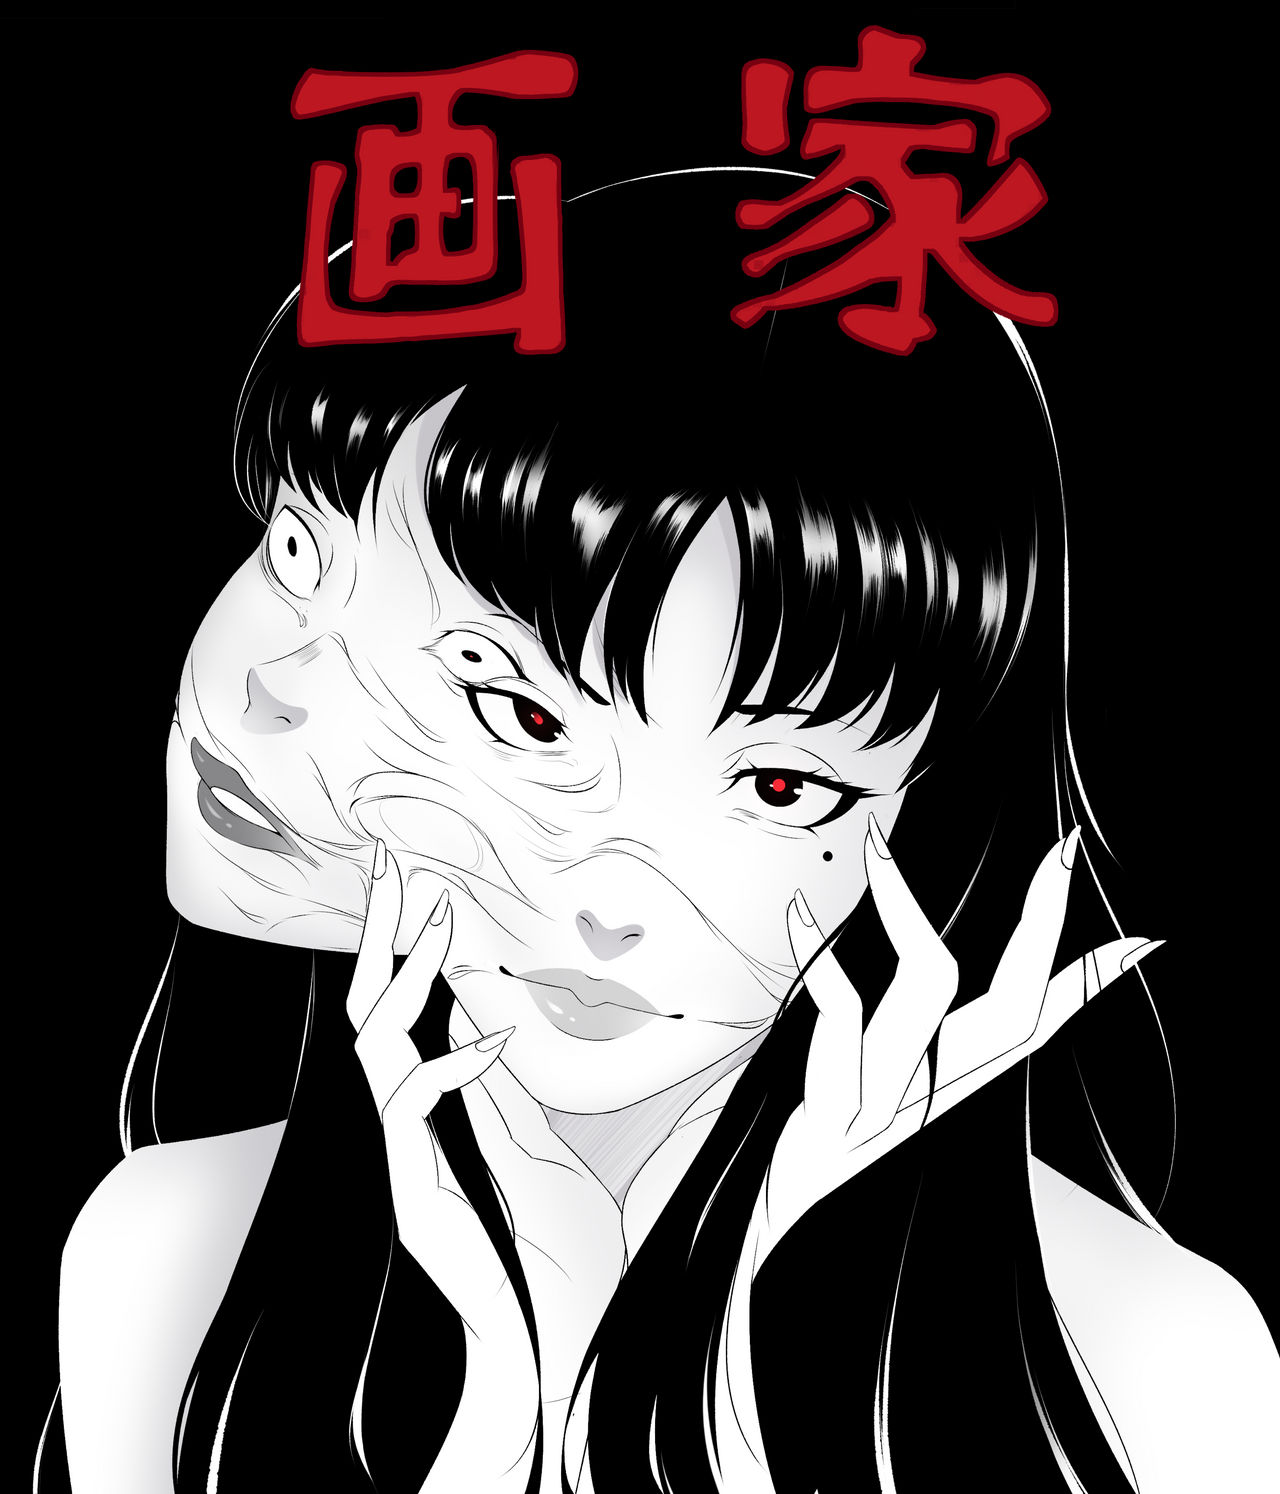 Tomie - Junji Ito - Anime Style (My Version) by TonyGG7 on DeviantArt